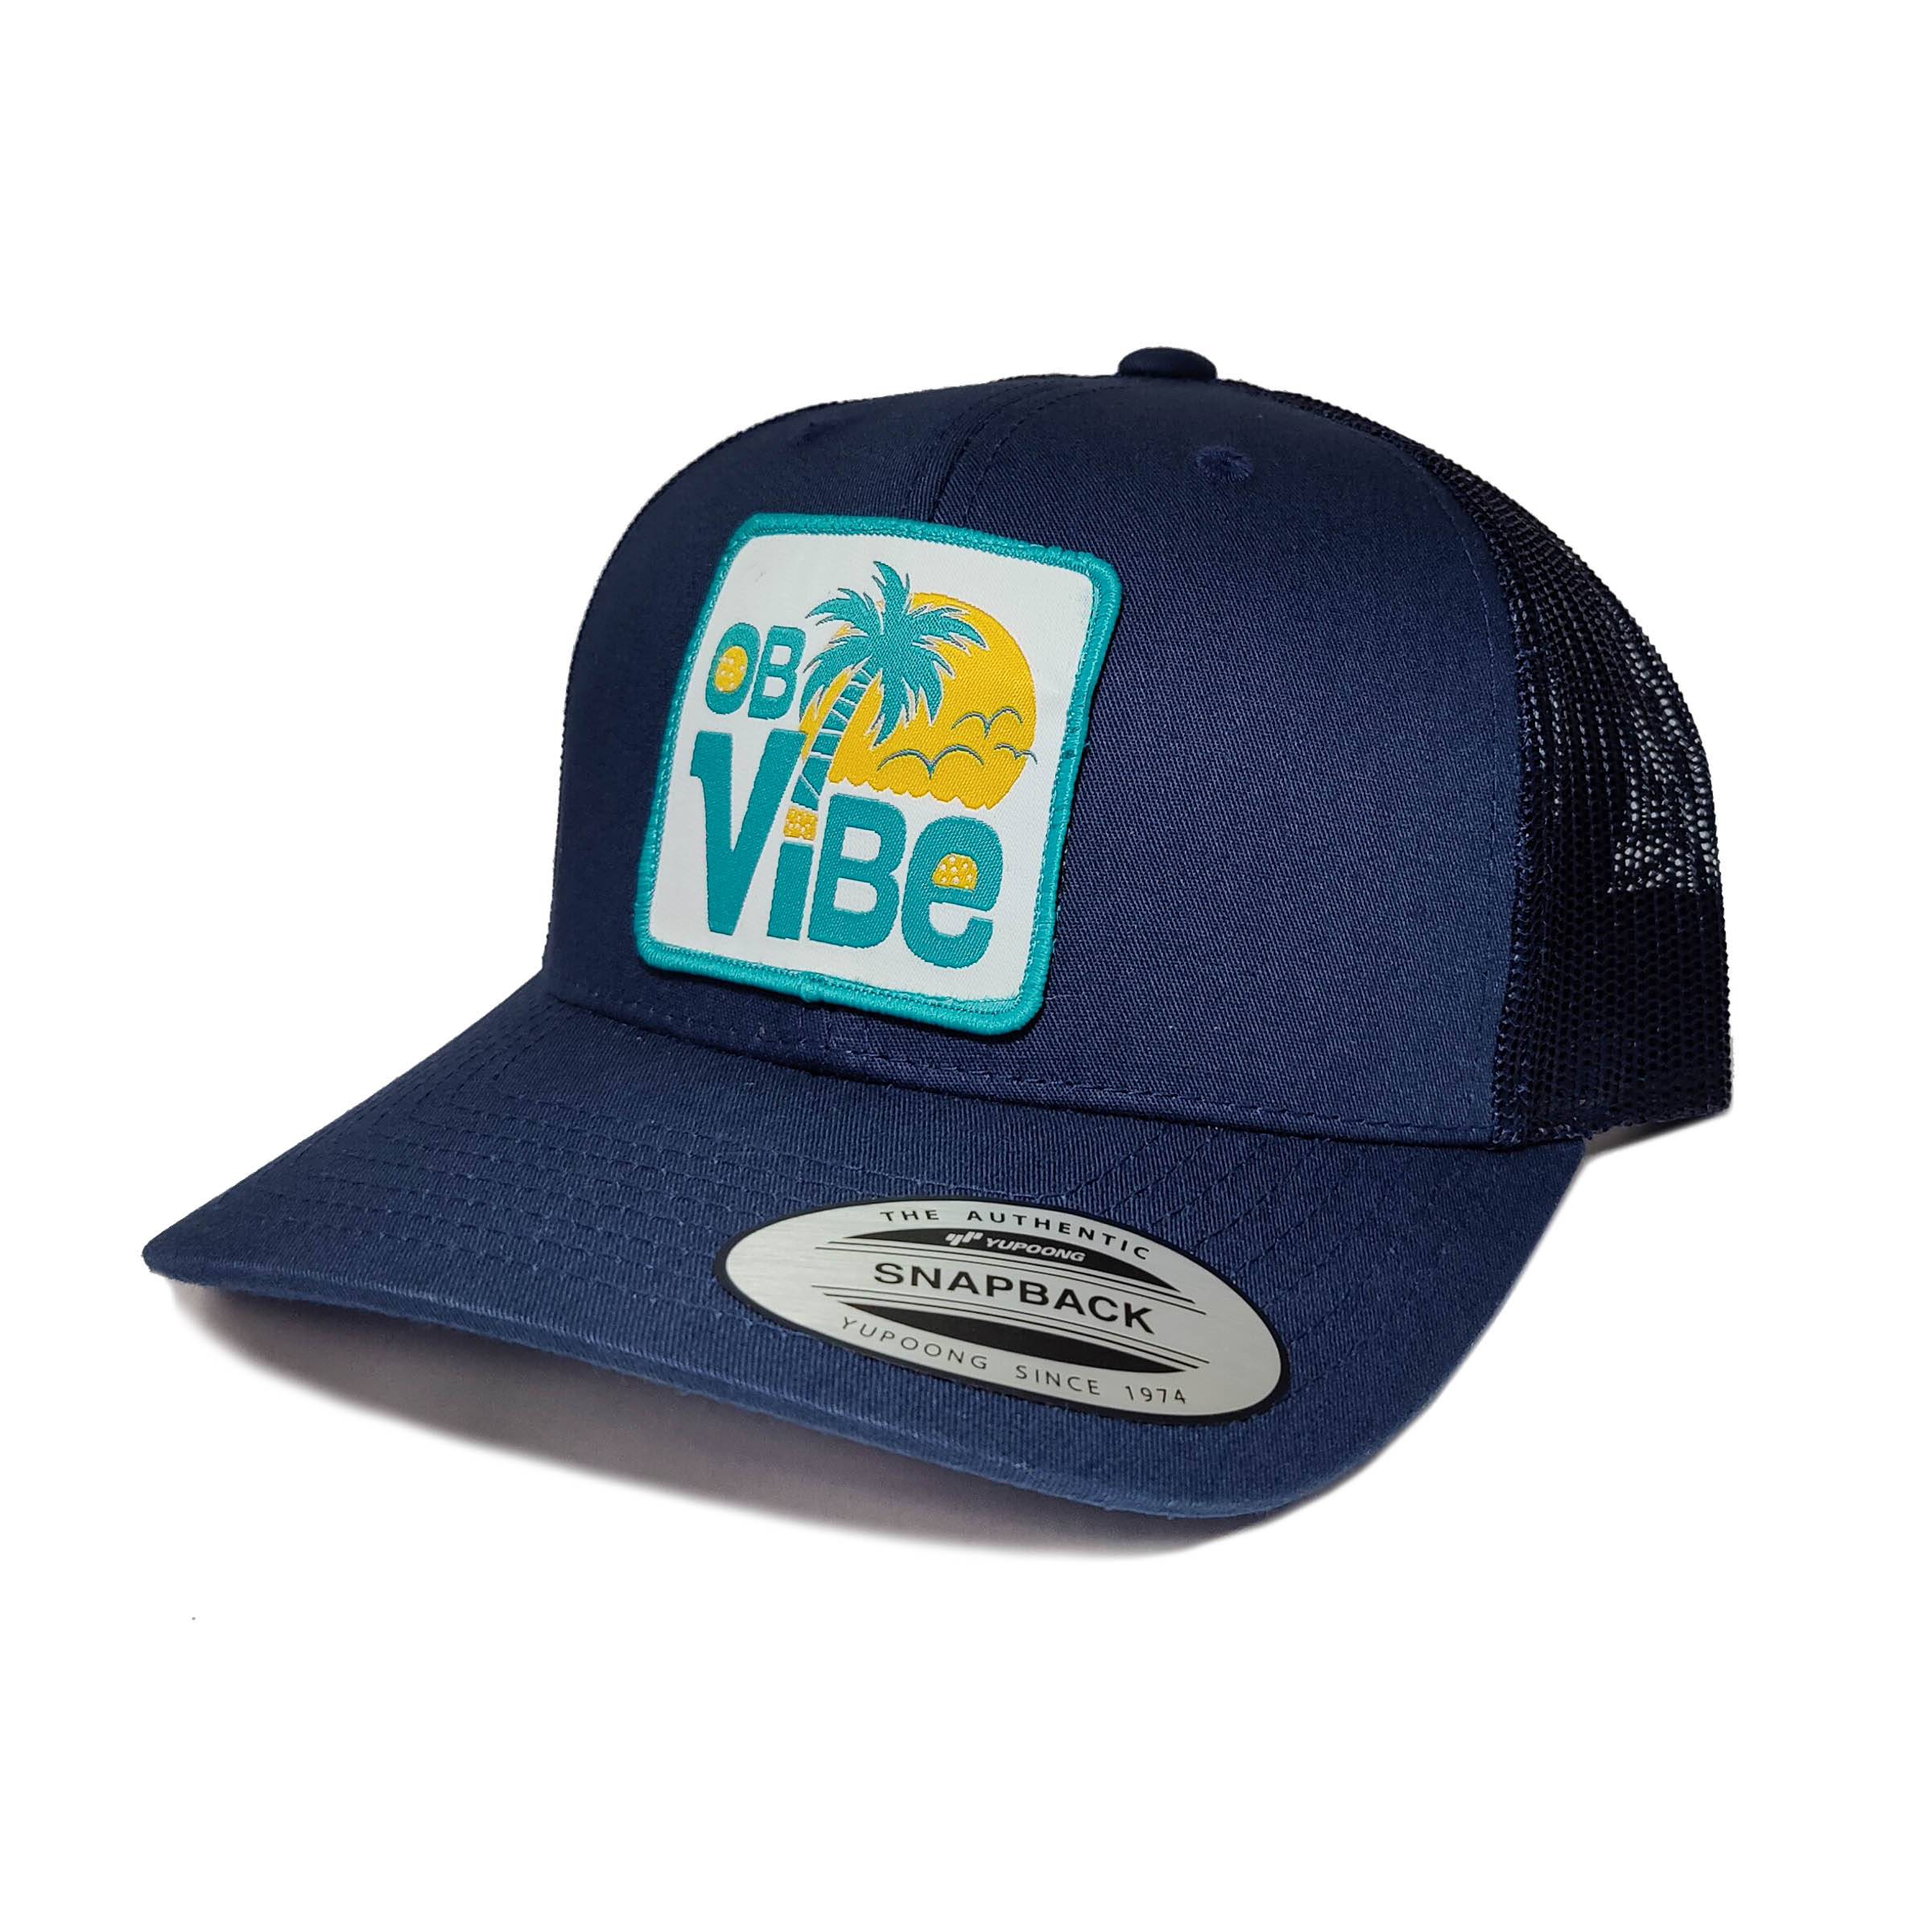 Ocean Beach Product: OB Vibe Trucker Hat (navy)